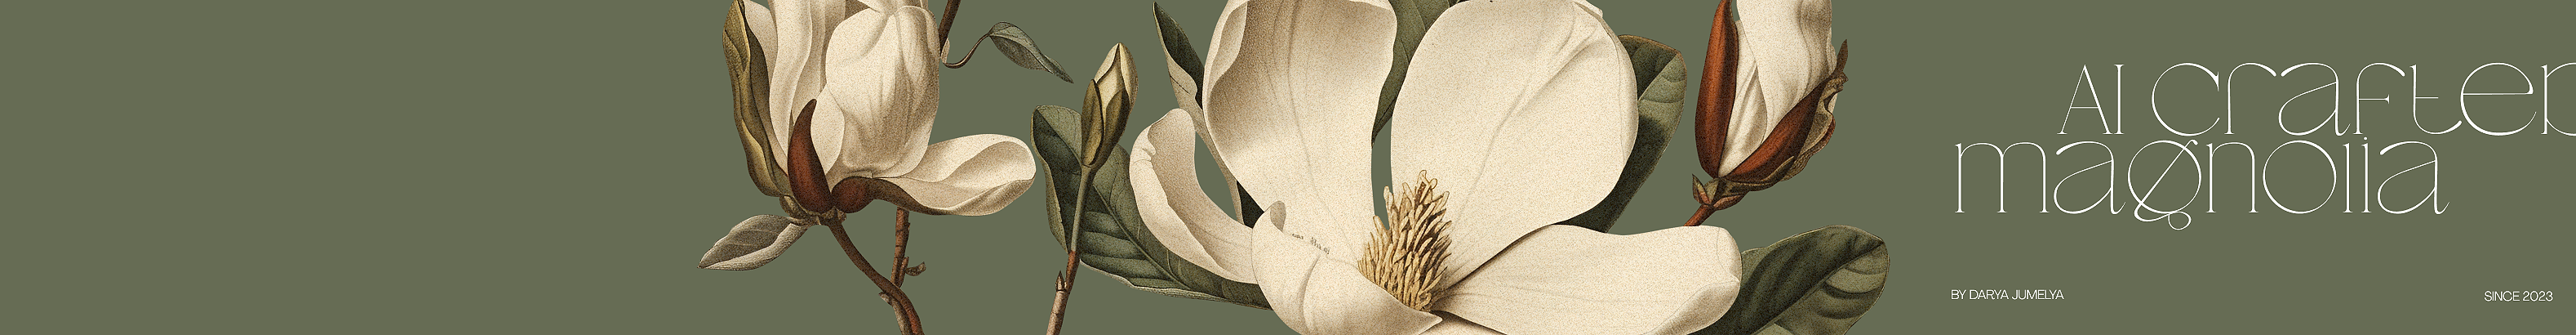 ✦ AI Crafted Magnolia ✦'s profile banner